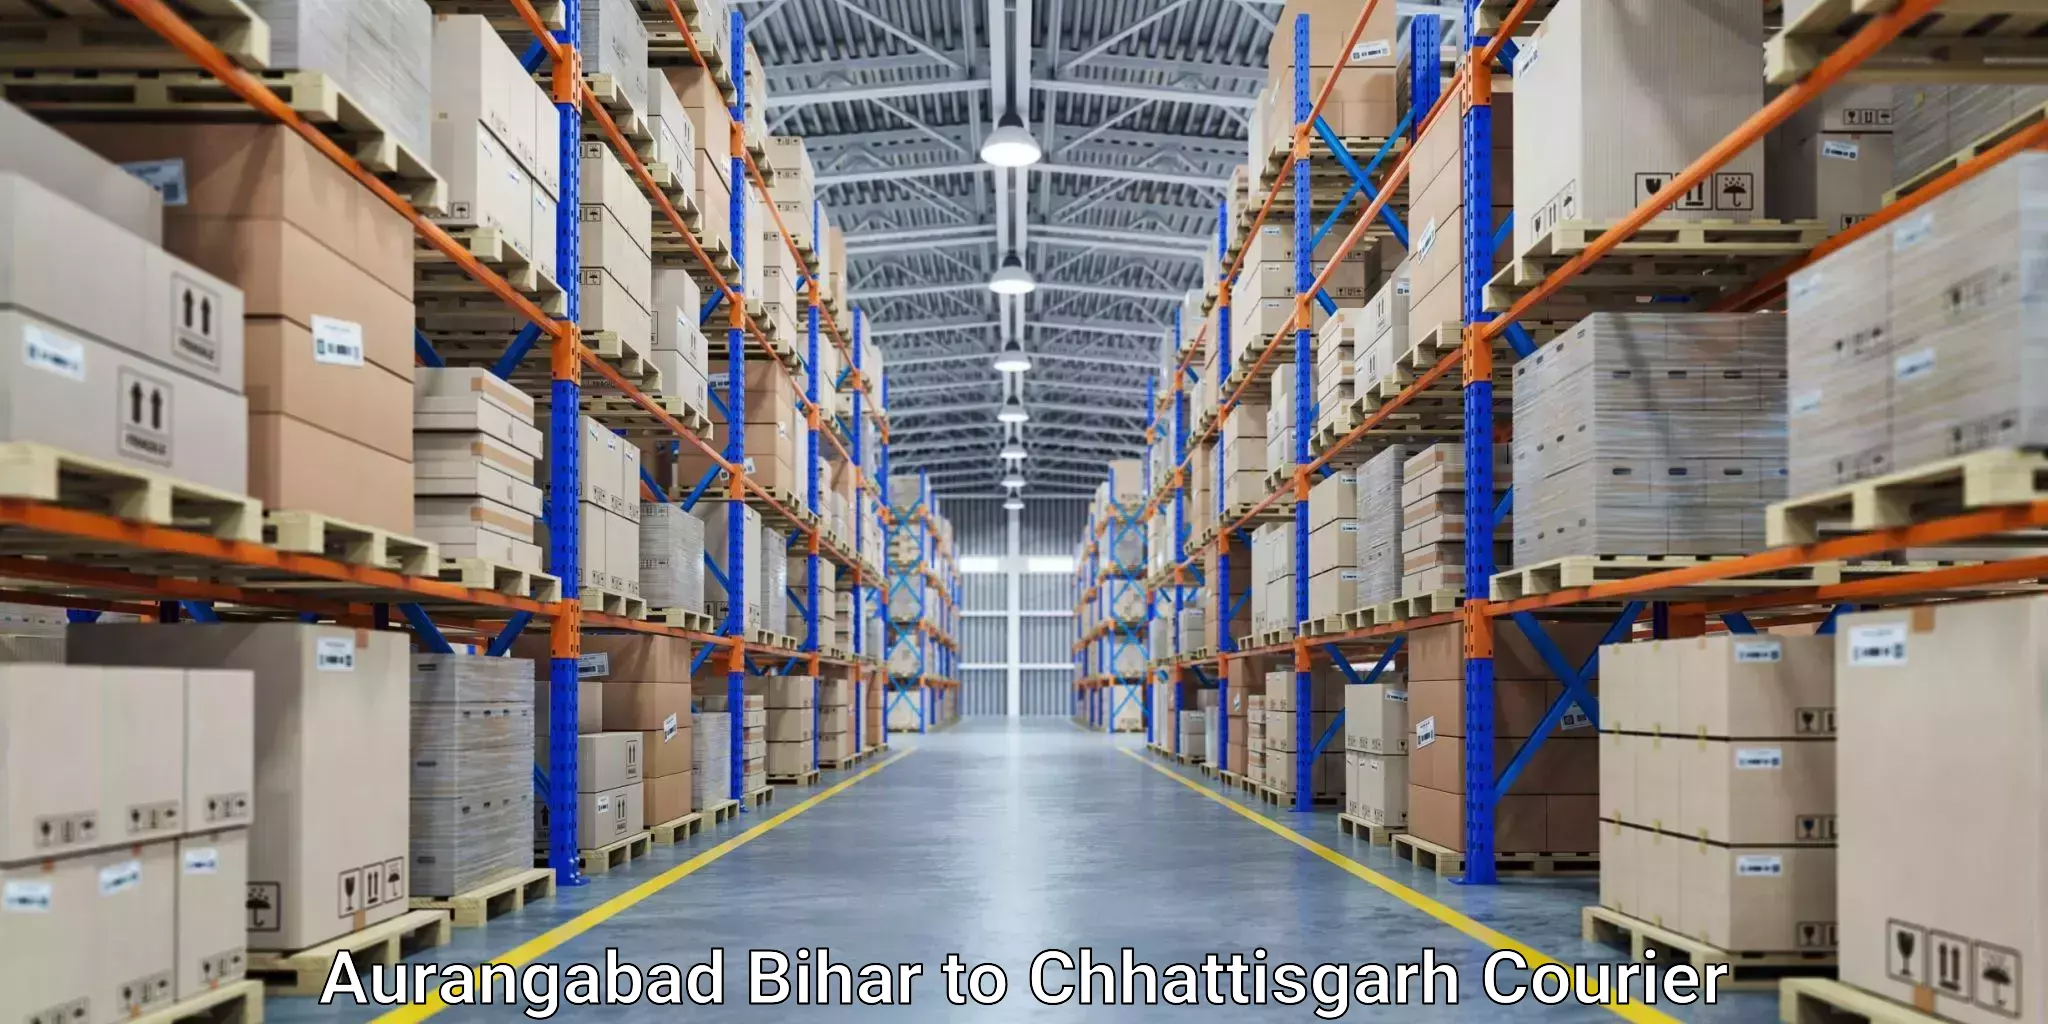 24/7 courier service in Aurangabad Bihar to bagbahra